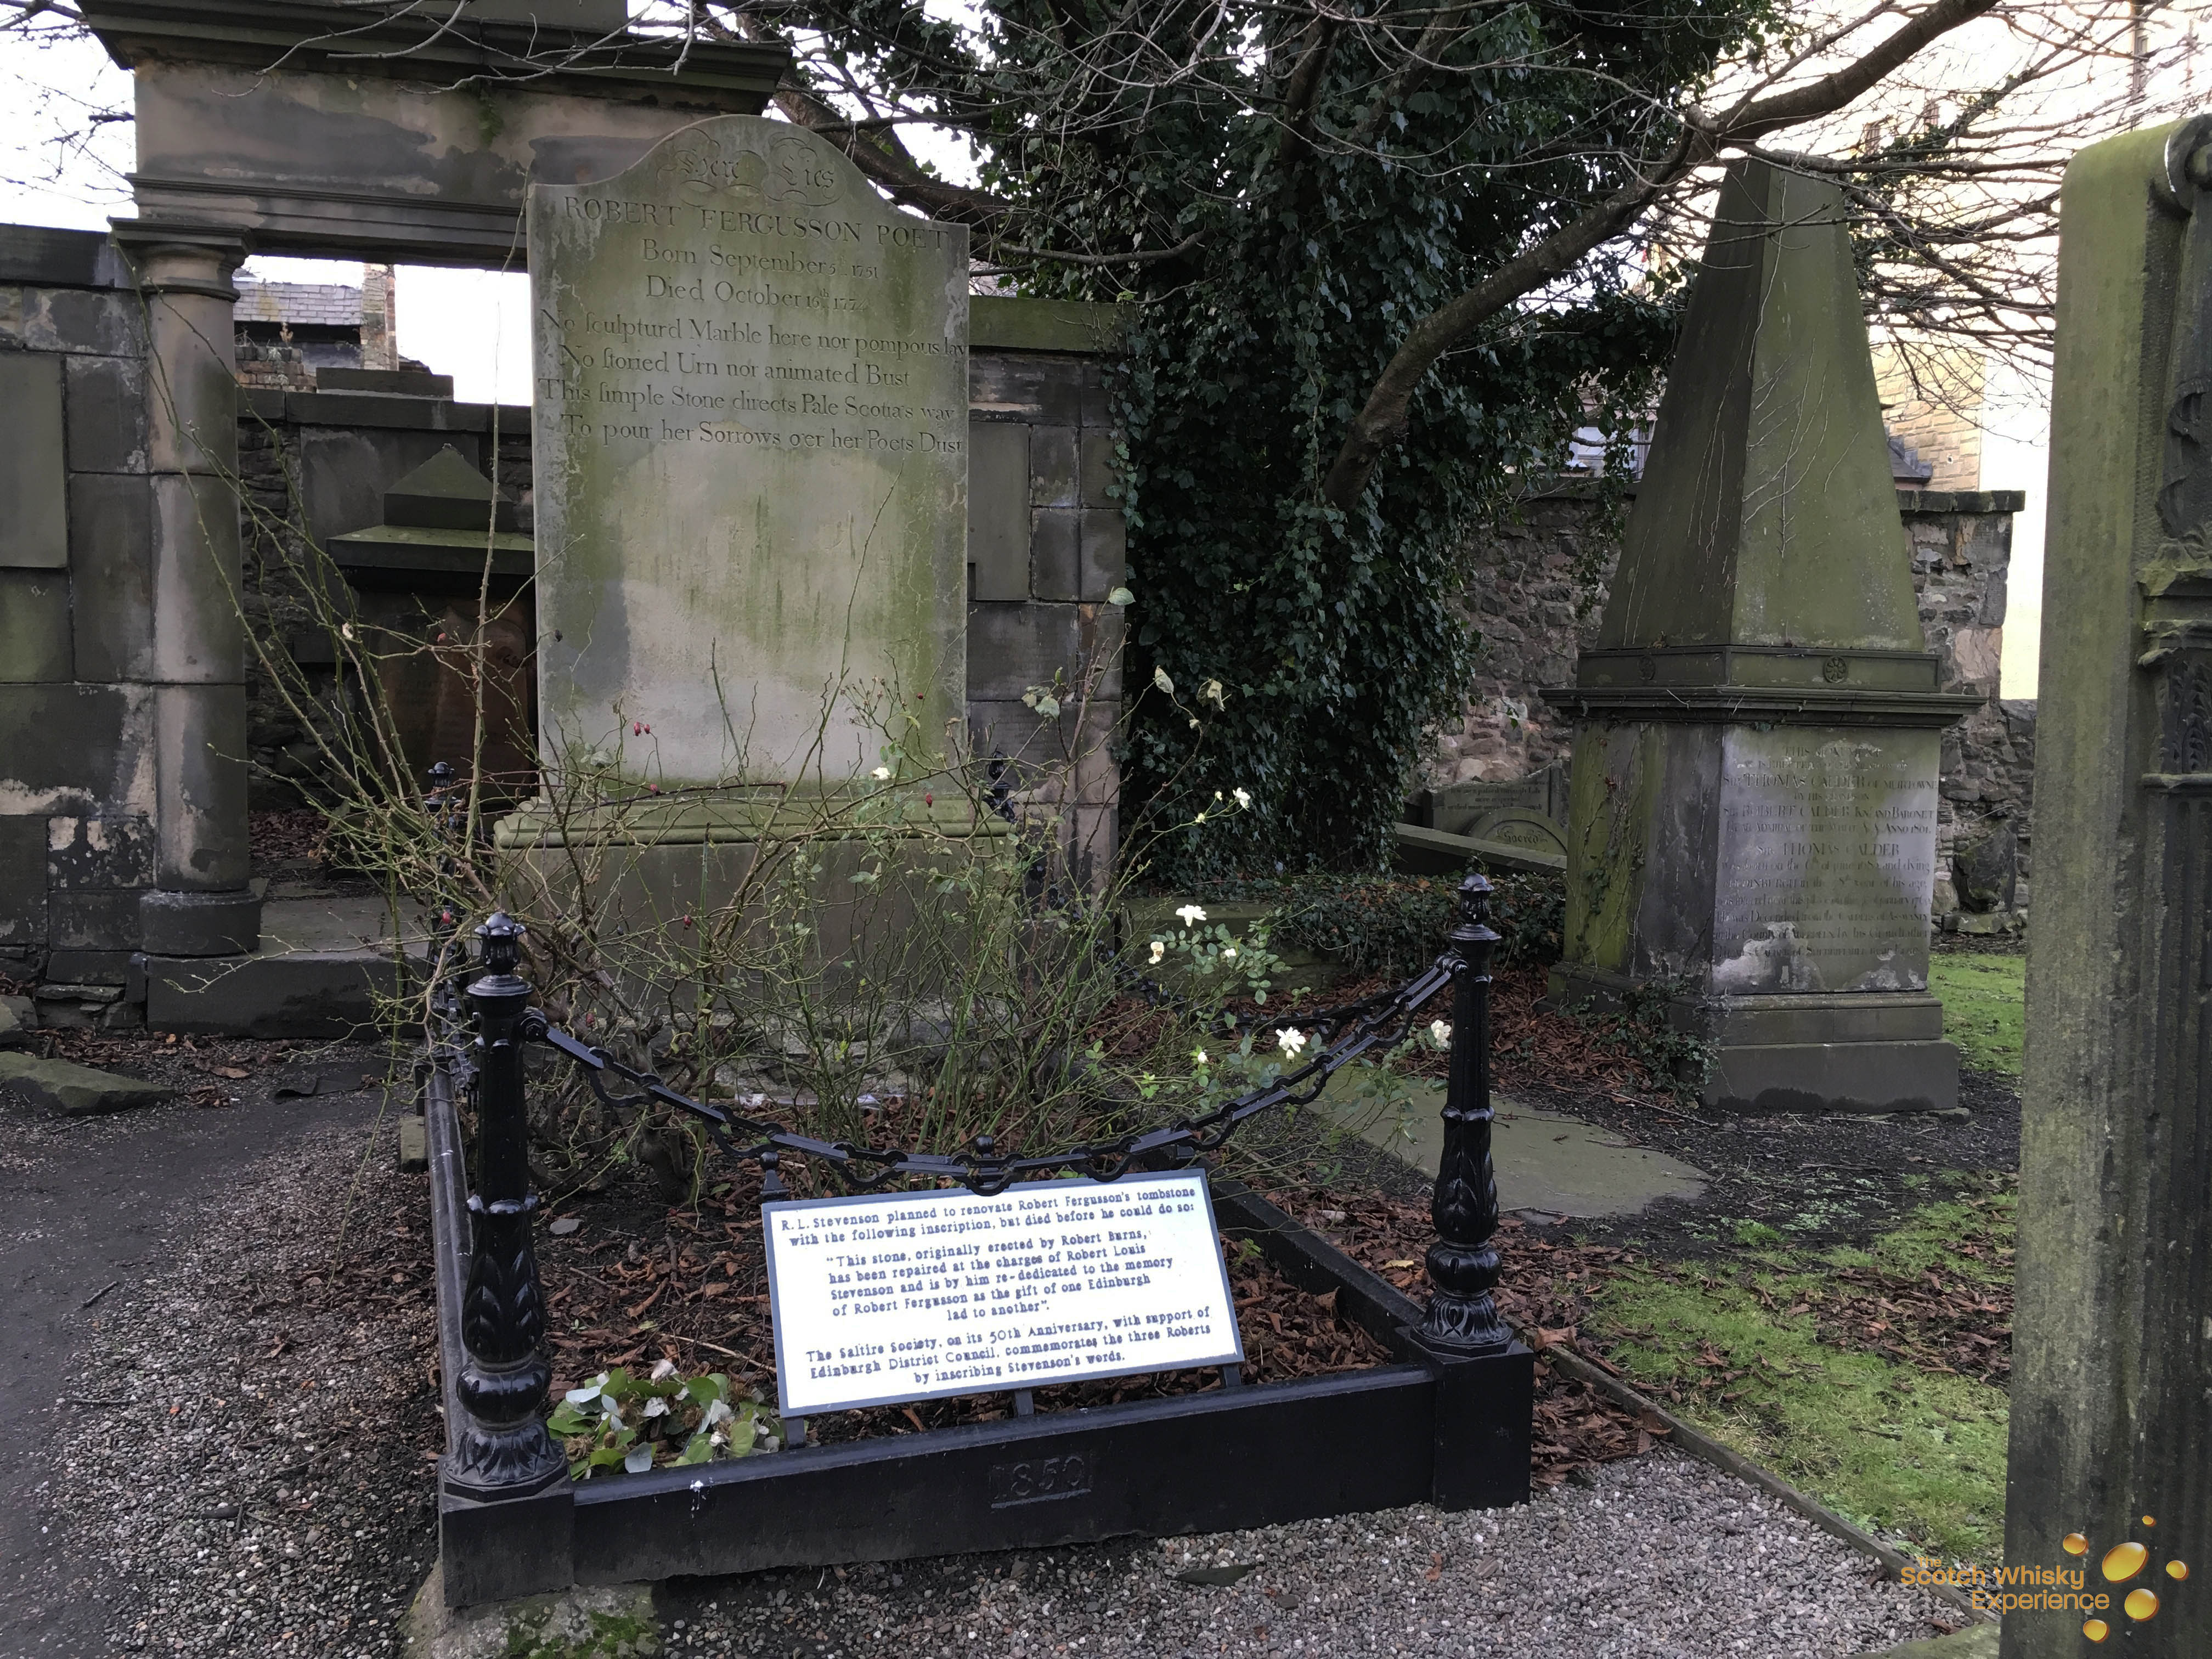 Robert Fergusson’s gravestone, with memoral epitaph by Robert Louis Stevenson – The Scotch ...